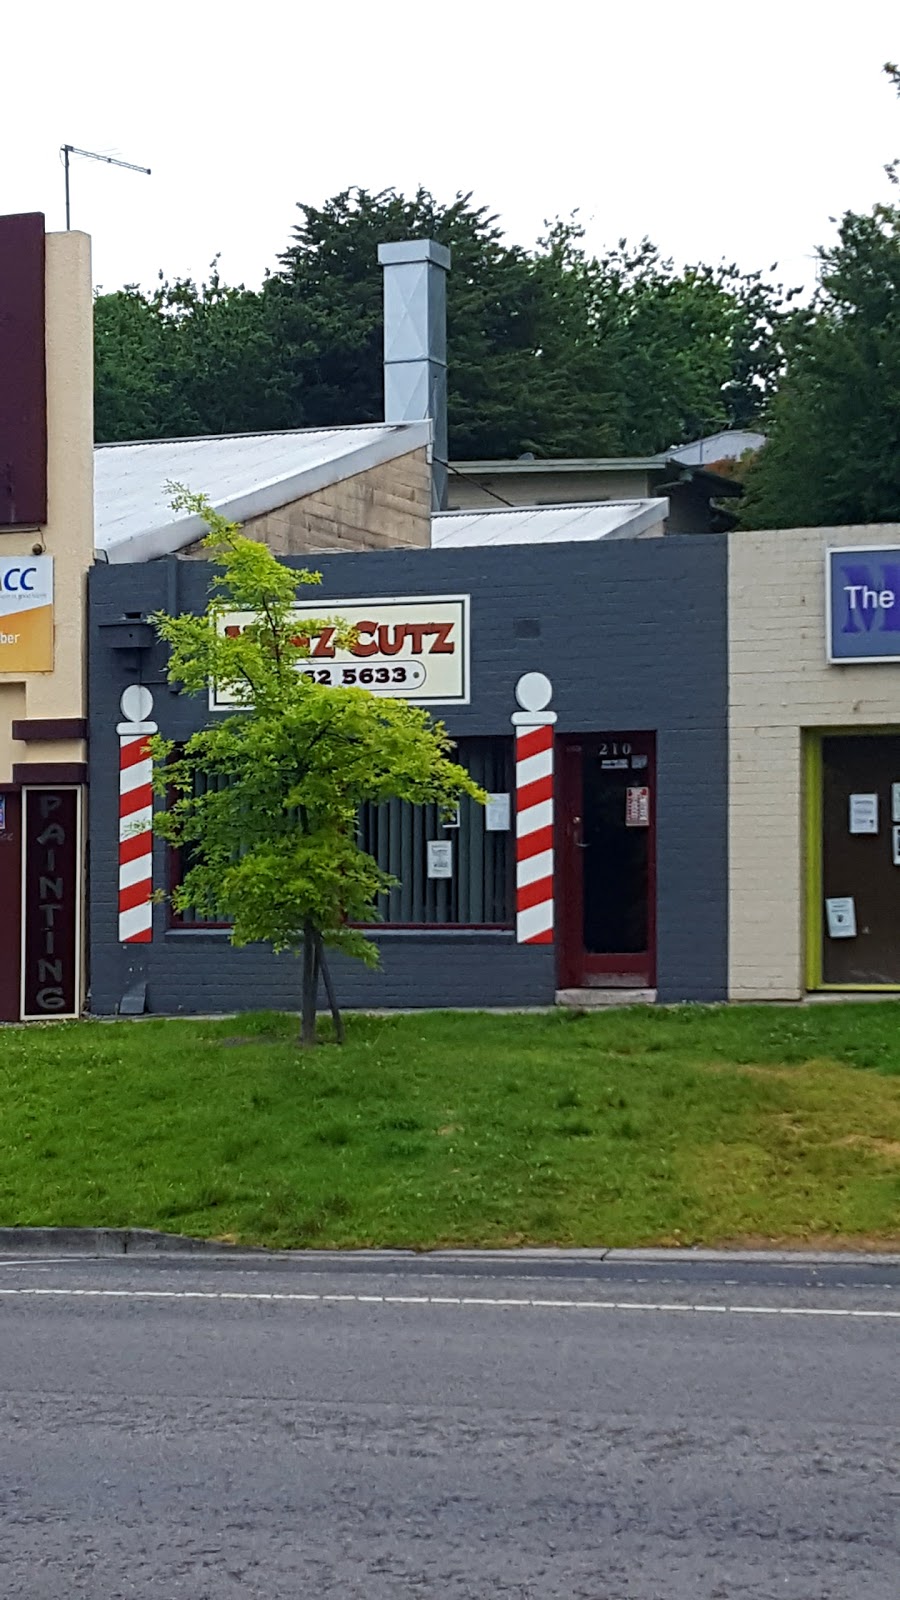 Menz Cutz | hair care | 210 Maroondah Hwy, Healesville VIC 3777, Australia | 0359625633 OR +61 3 5962 5633